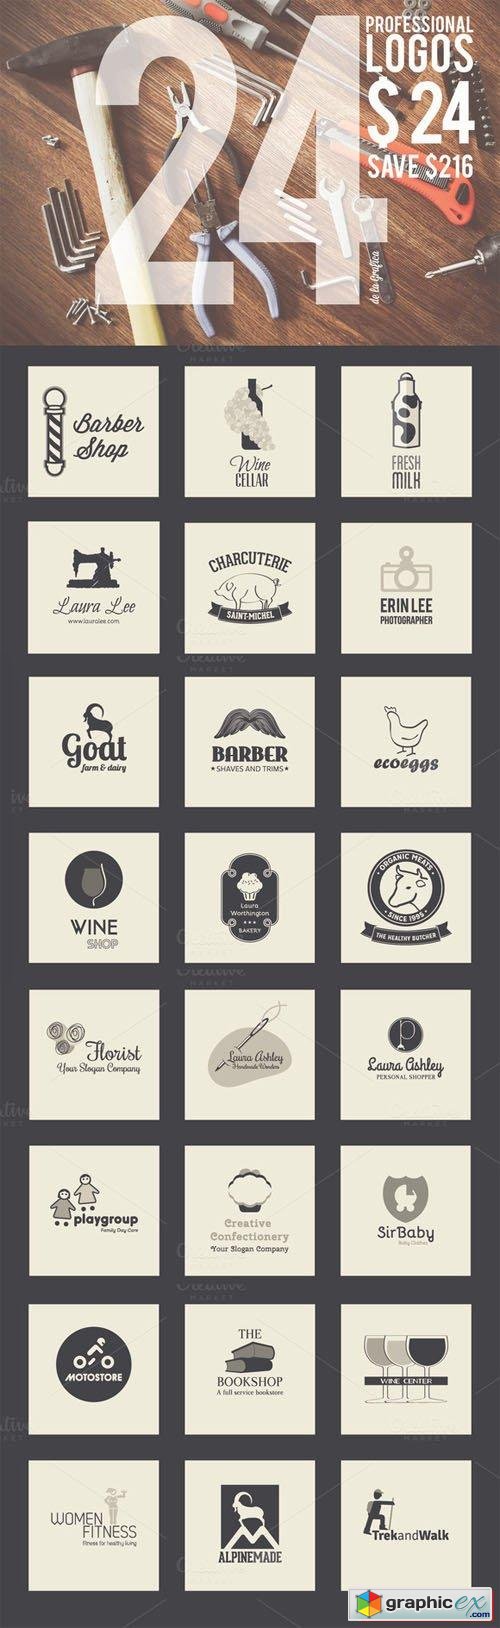  24 Professional Logos Templates